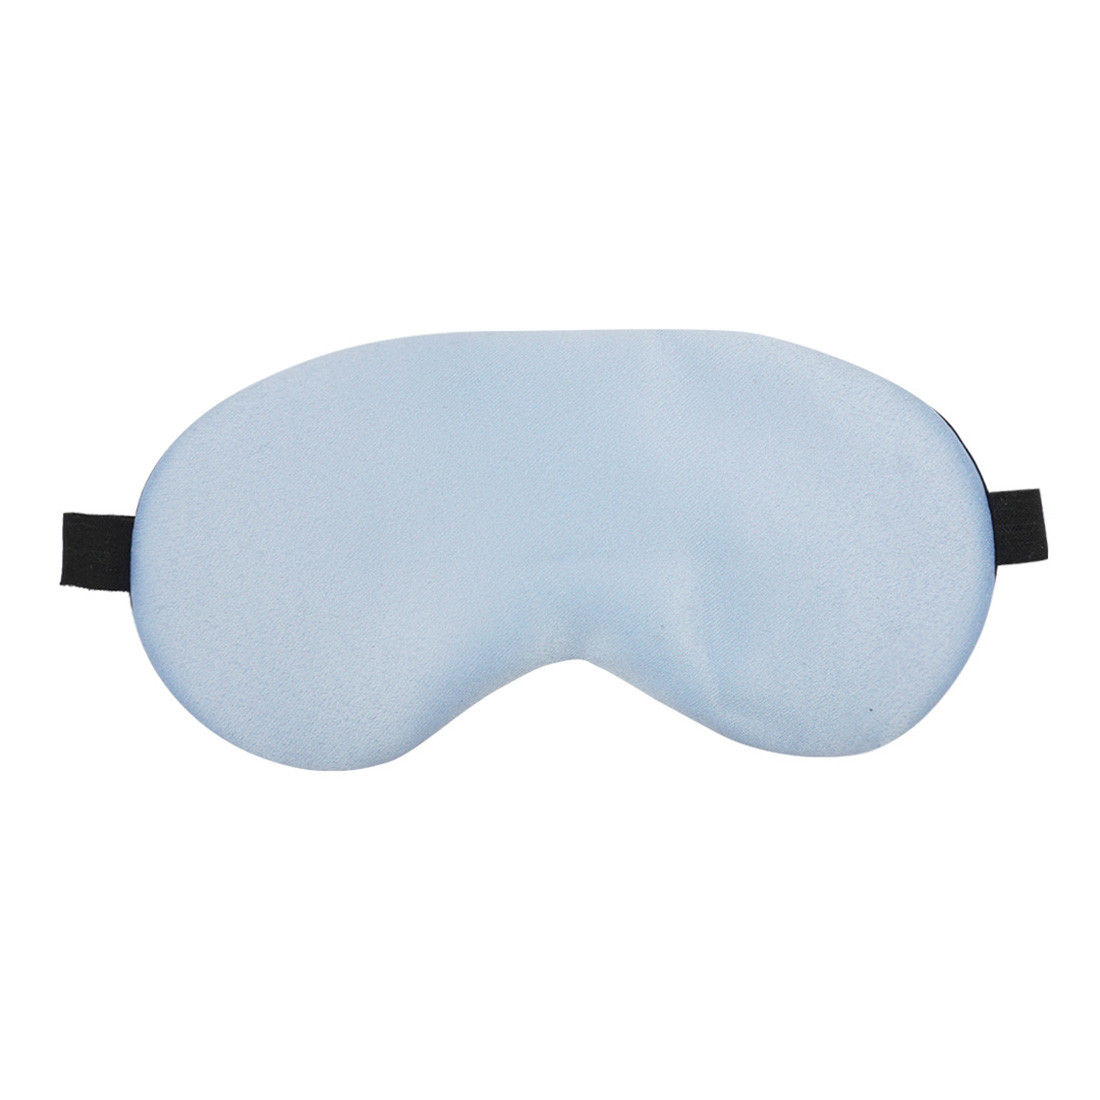 Crazy Corner Solid Blue Eye Mask Eye Mask/Printed Eye Mask/Sleeping Mask/Travel Eyemask/Eye Mask For Girl/Eye Mask For Women (7.5 x 4 Inches)